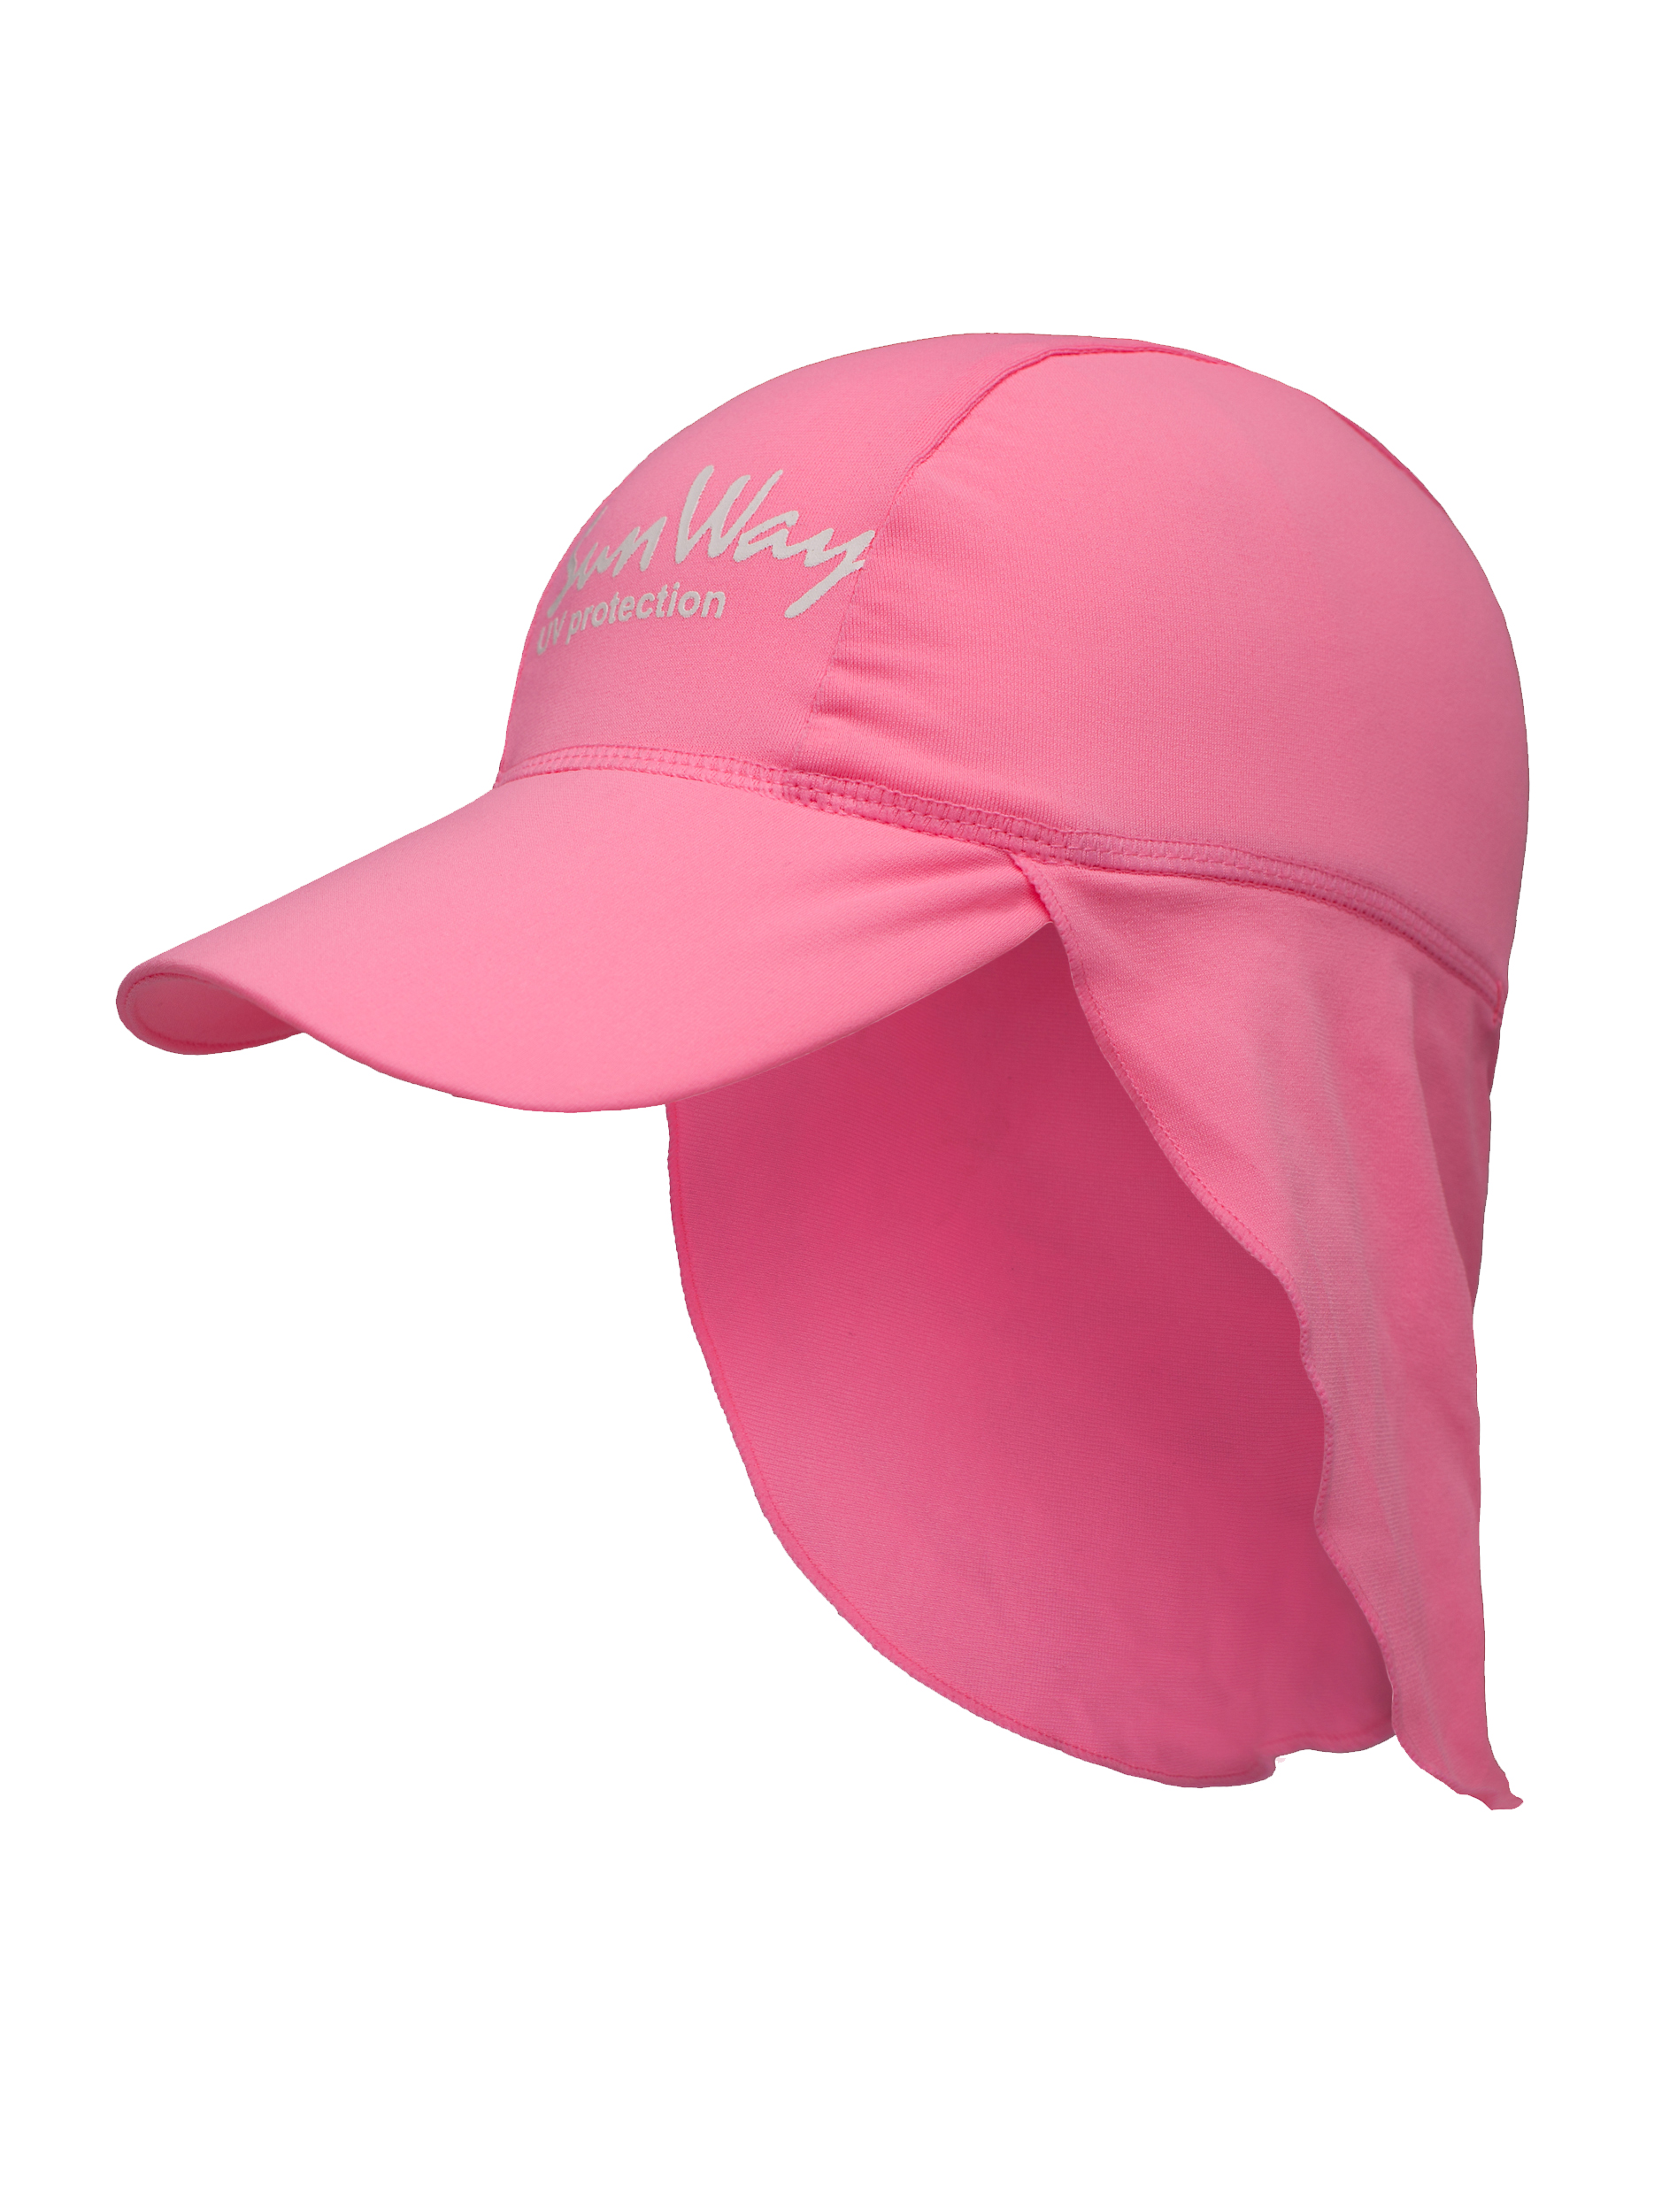 SunWay's Light Pink Legionnaire Hat